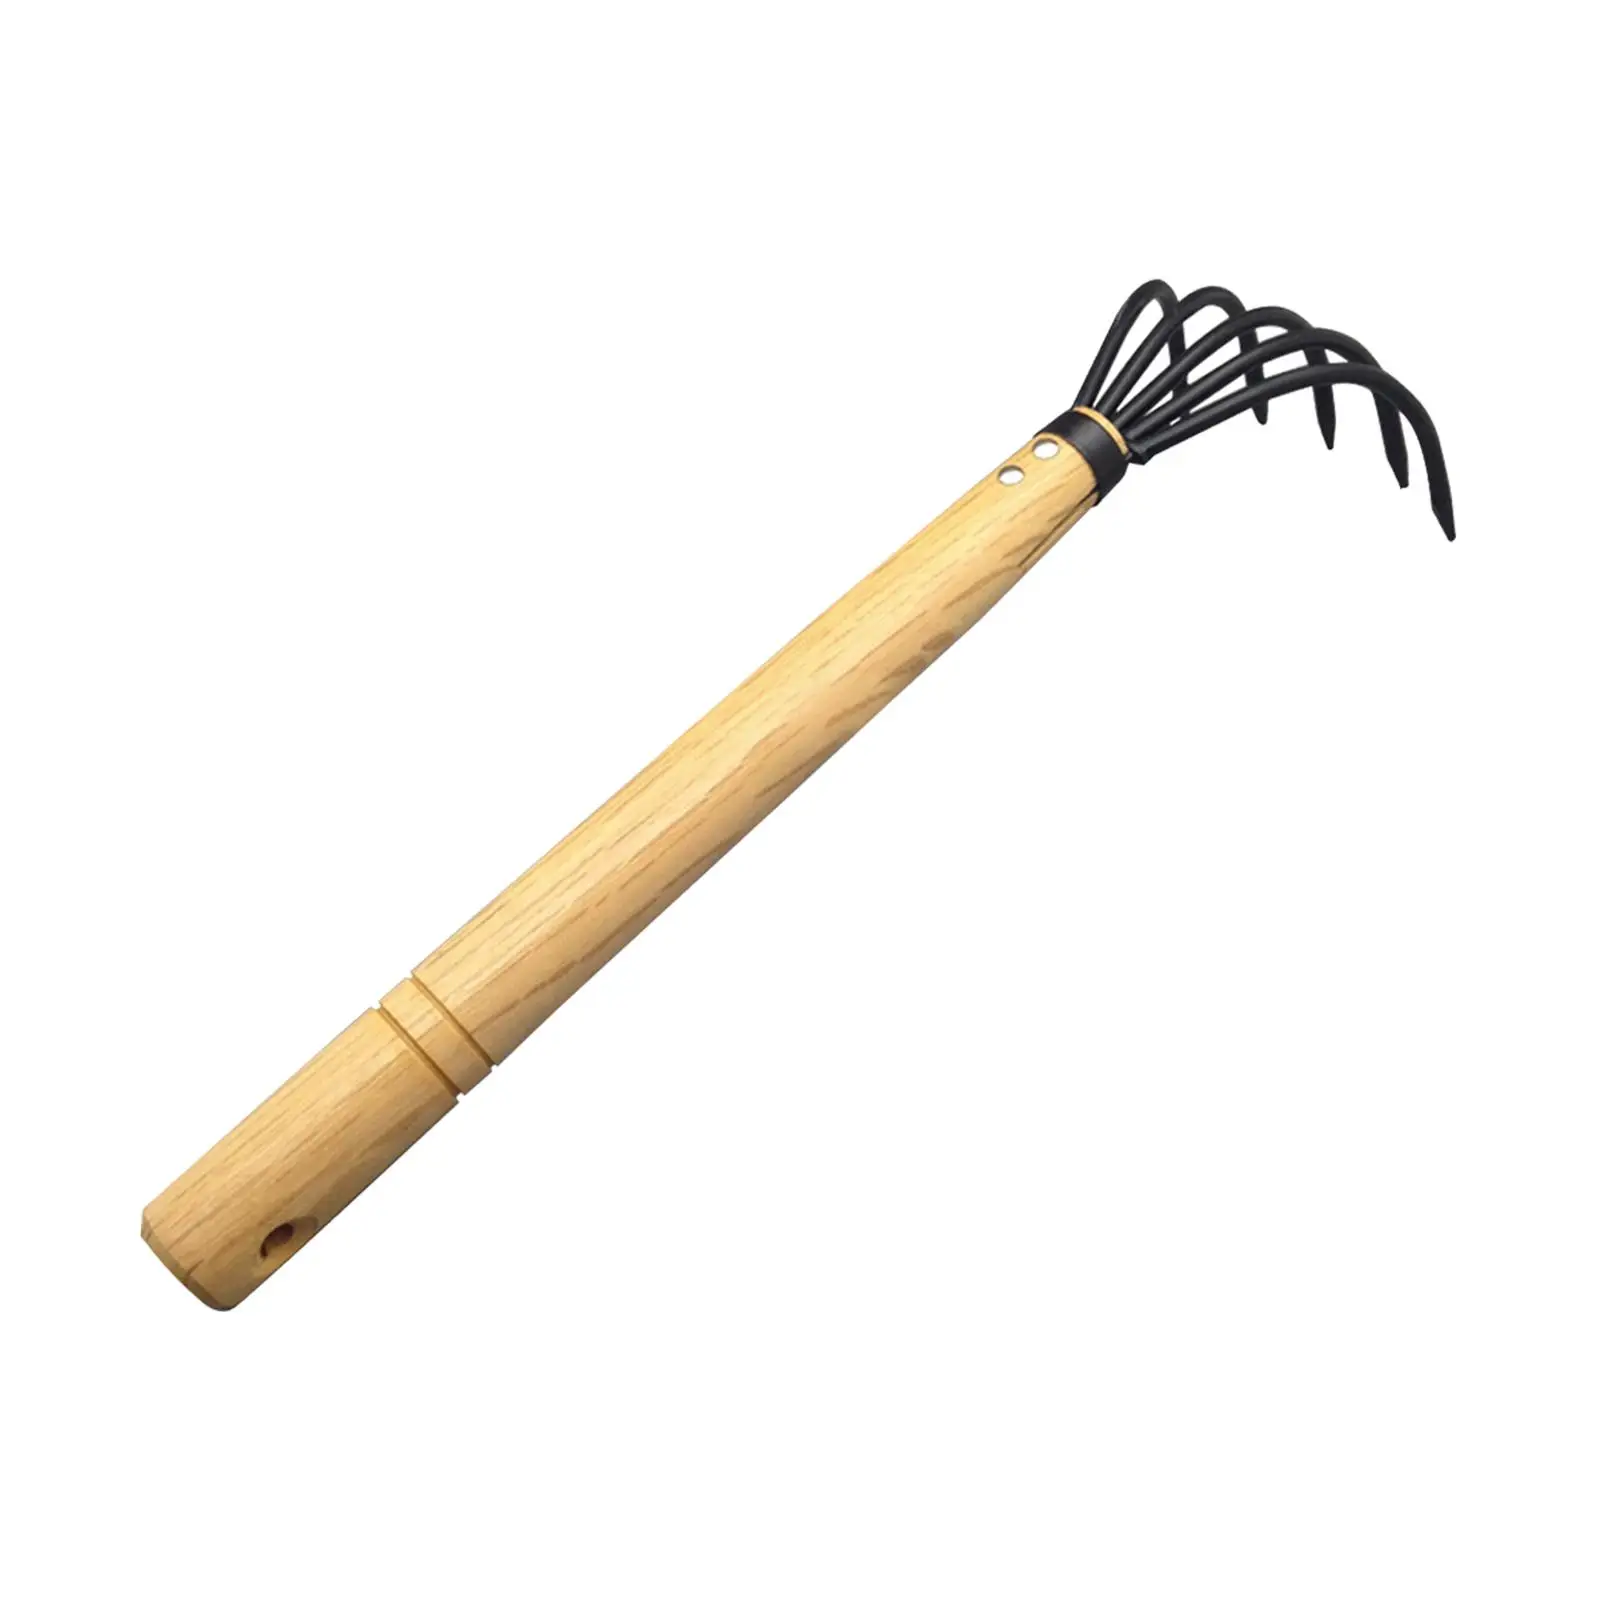 5 Claws Garden Rake Hand Rake Professional Garden Gardening Tools Handheld Wooden Handle Mutipurpose for Loose Soil Digging Farm